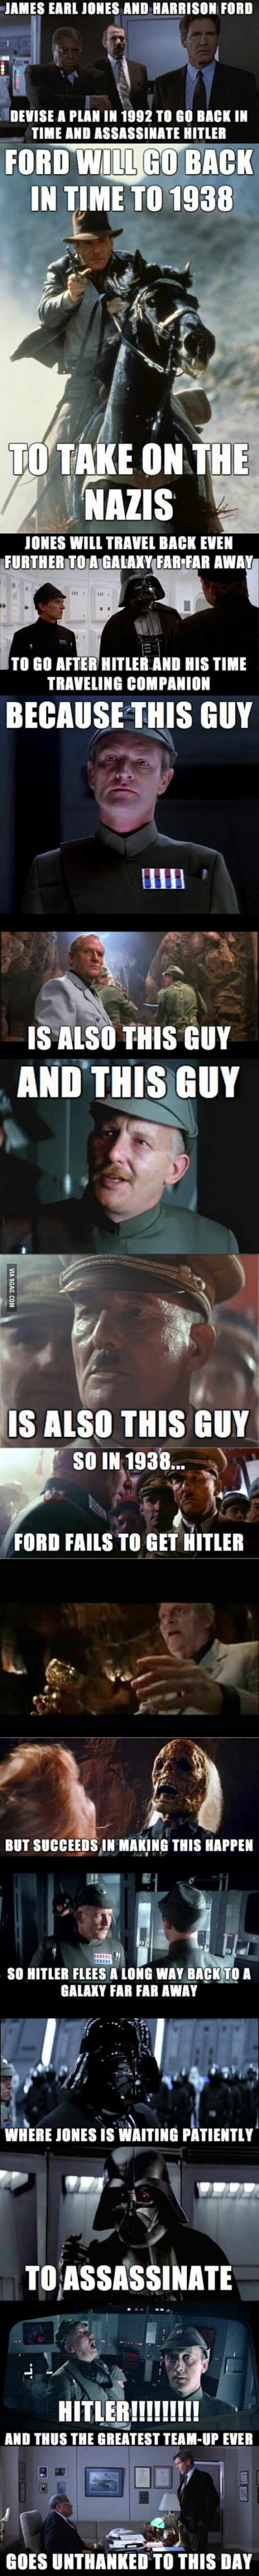 James Earl Jones and Harrison Ford devise a plan kill Hitler